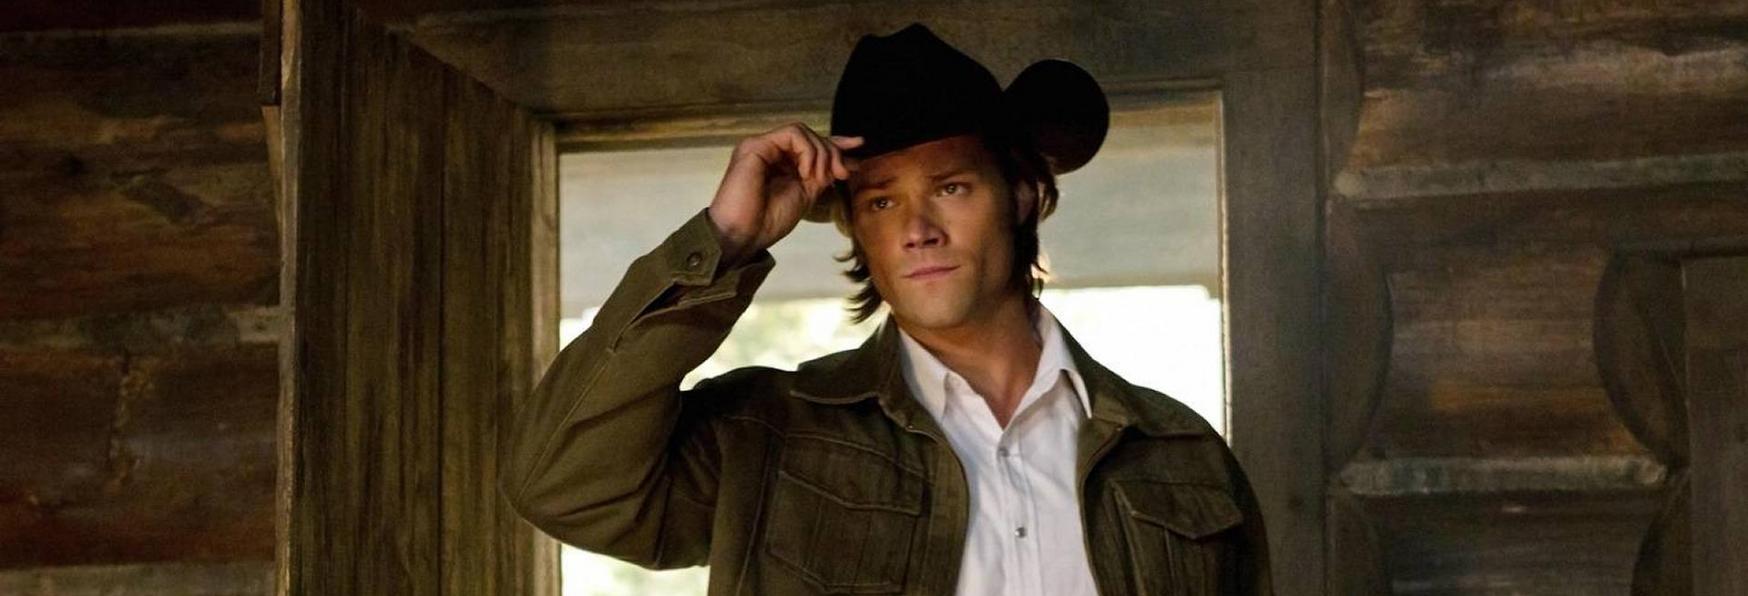 Walker Texas Ranger: Ecco il Primo Sguardo alla Serie TV Reboot con Jared Padalecki